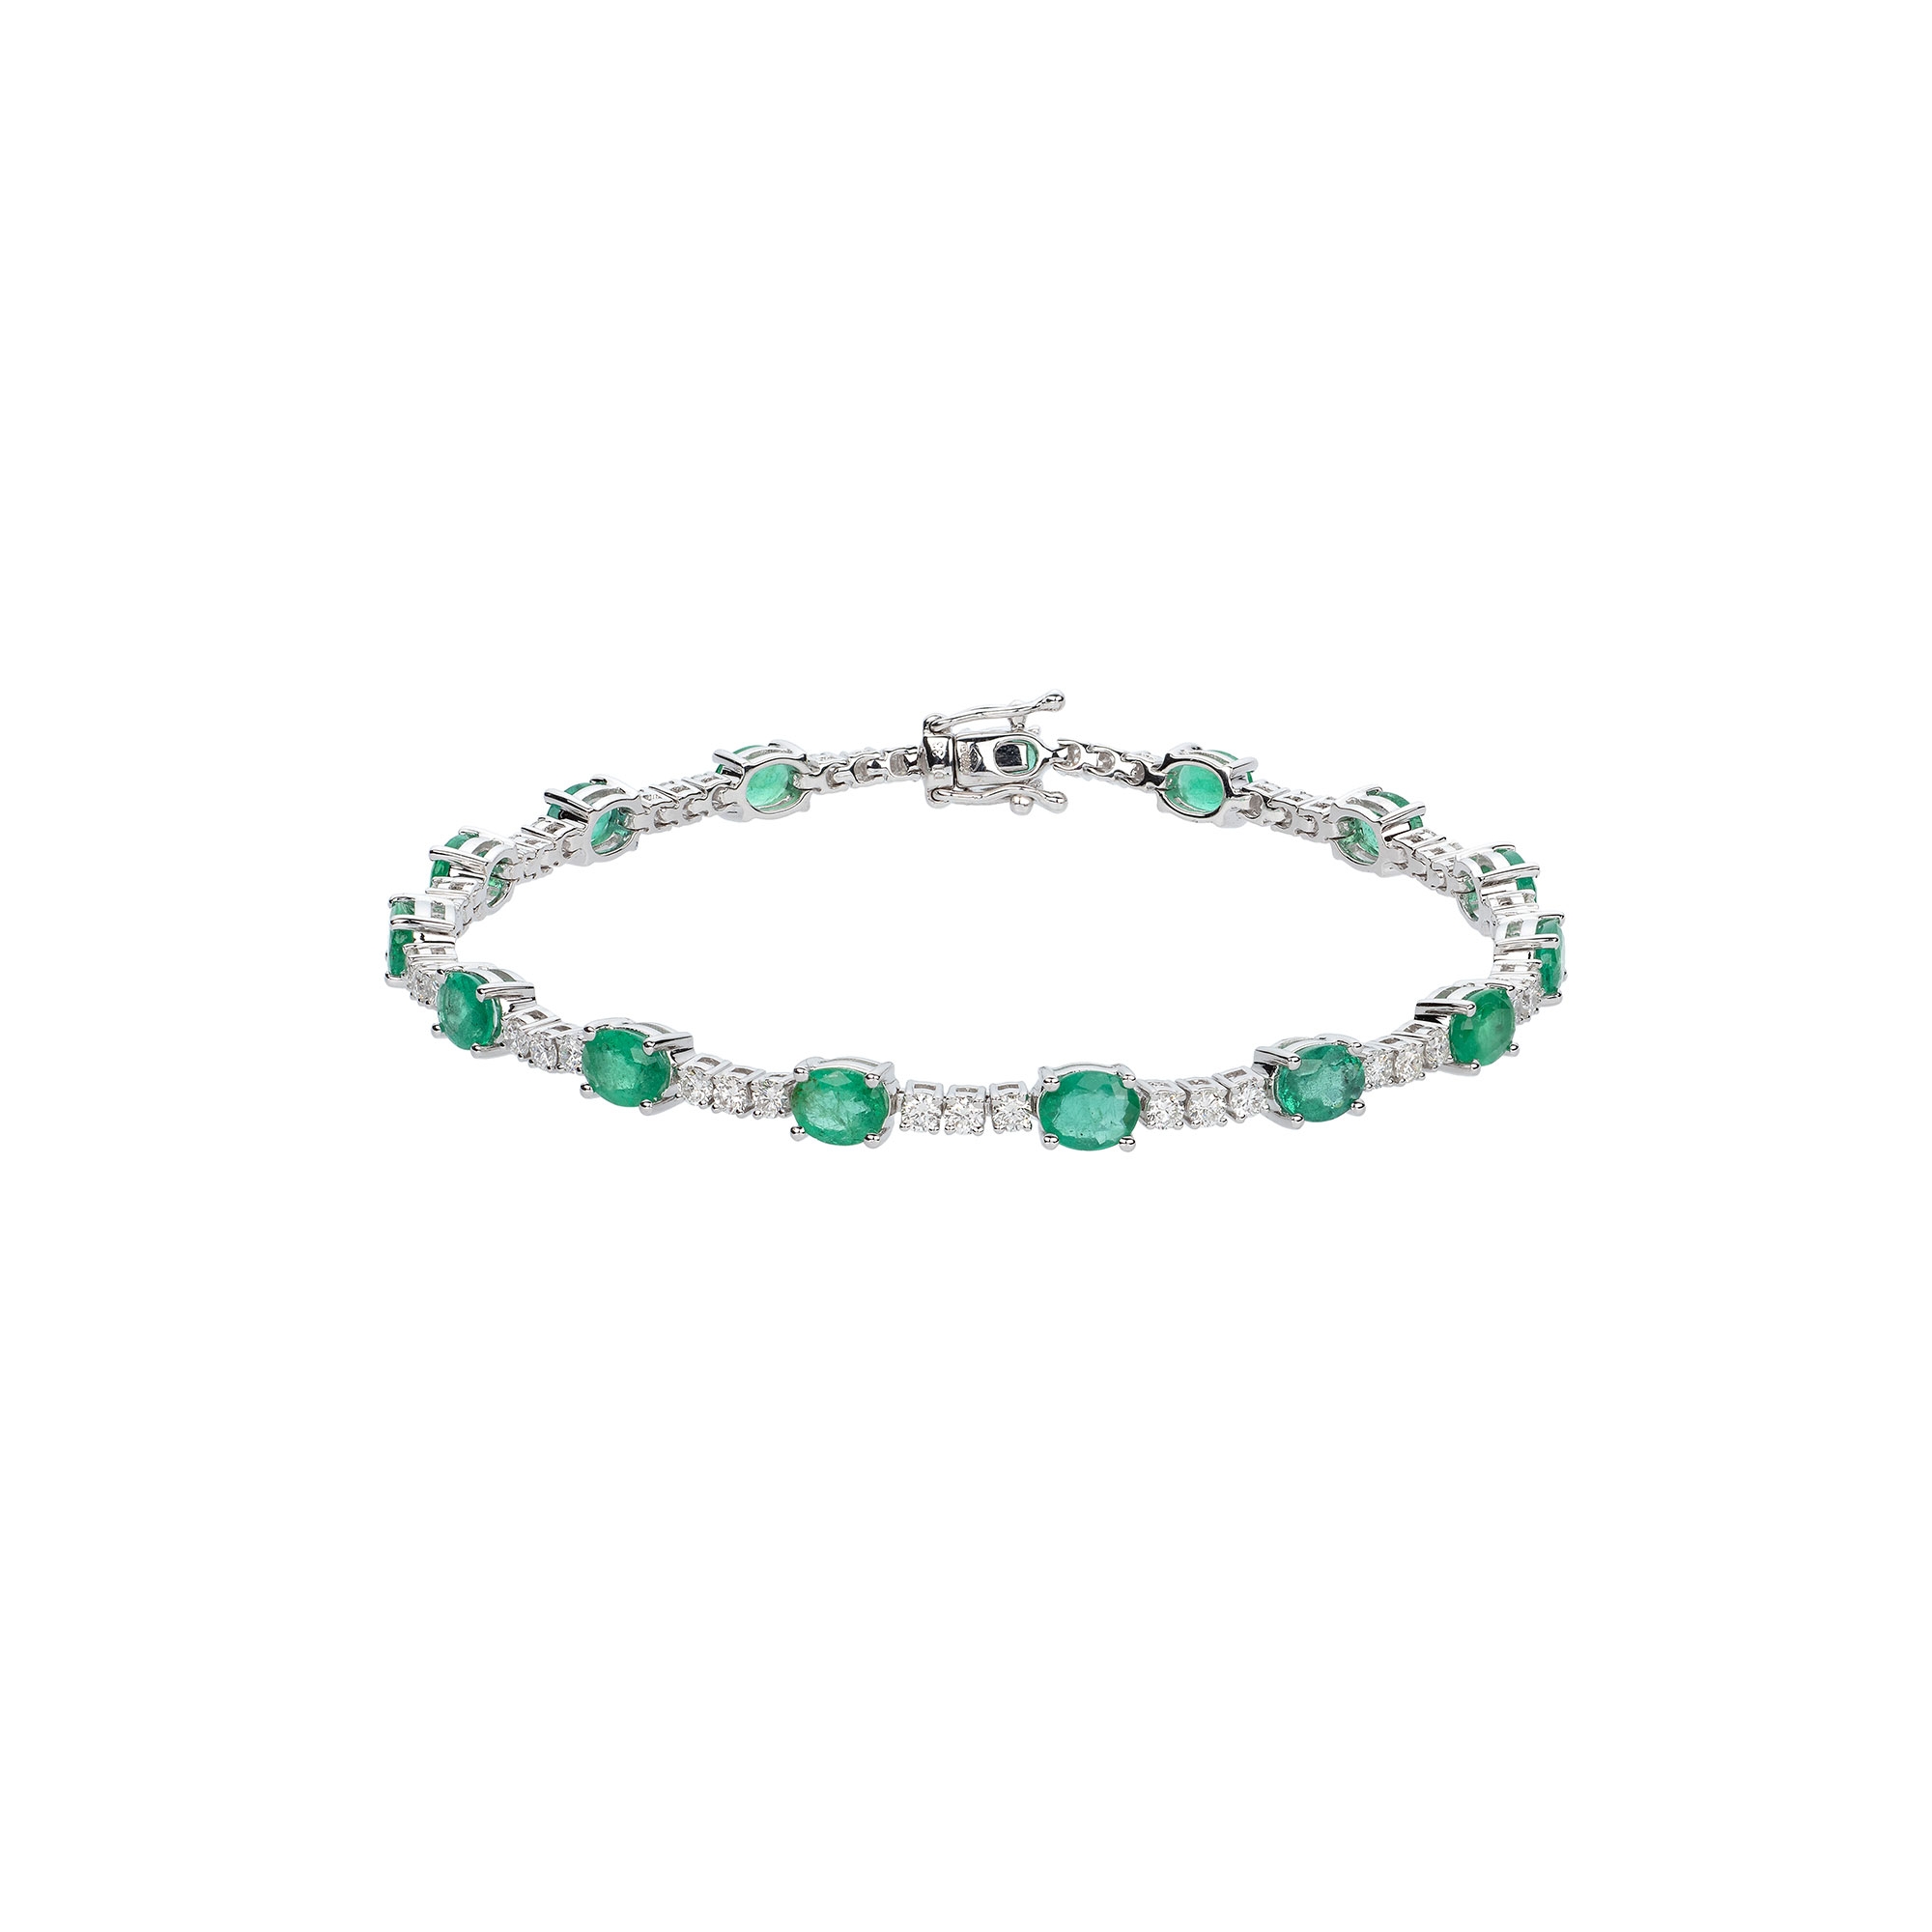 Details more than 70 white gold emerald bracelet best